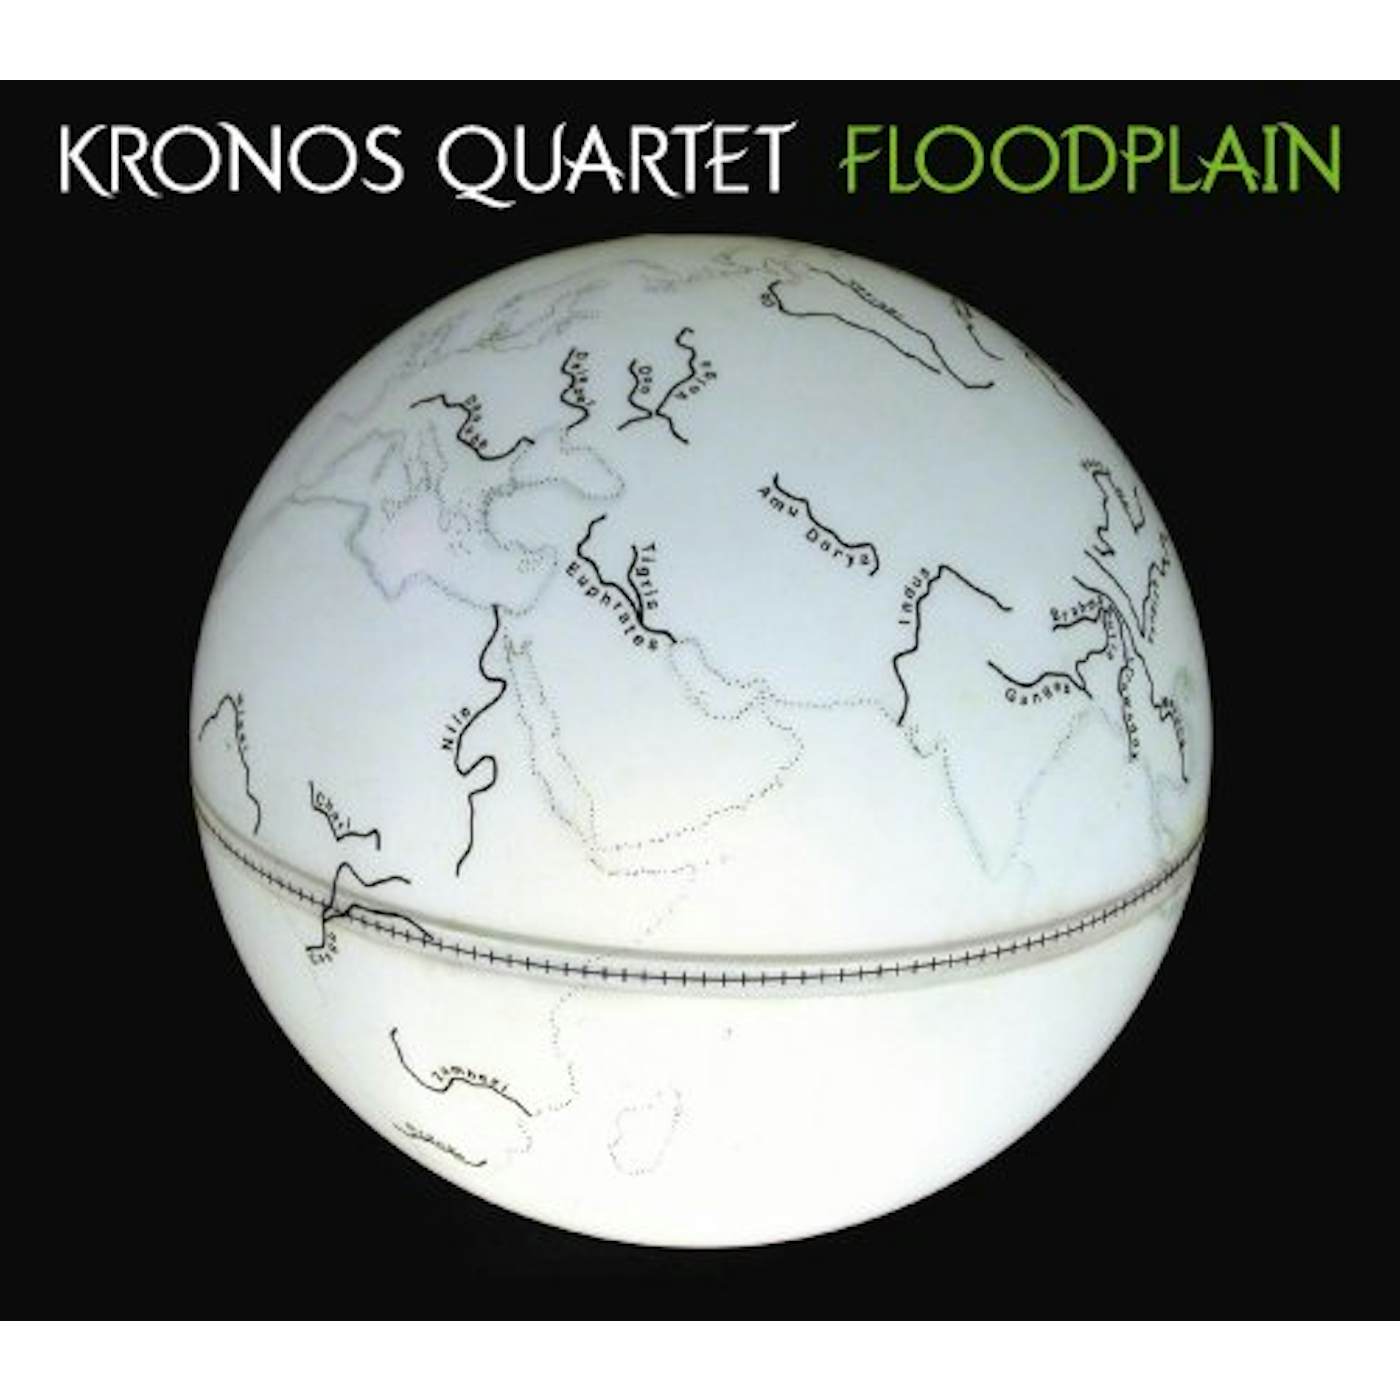 Kronos Quartet FLOODPLAIN CD